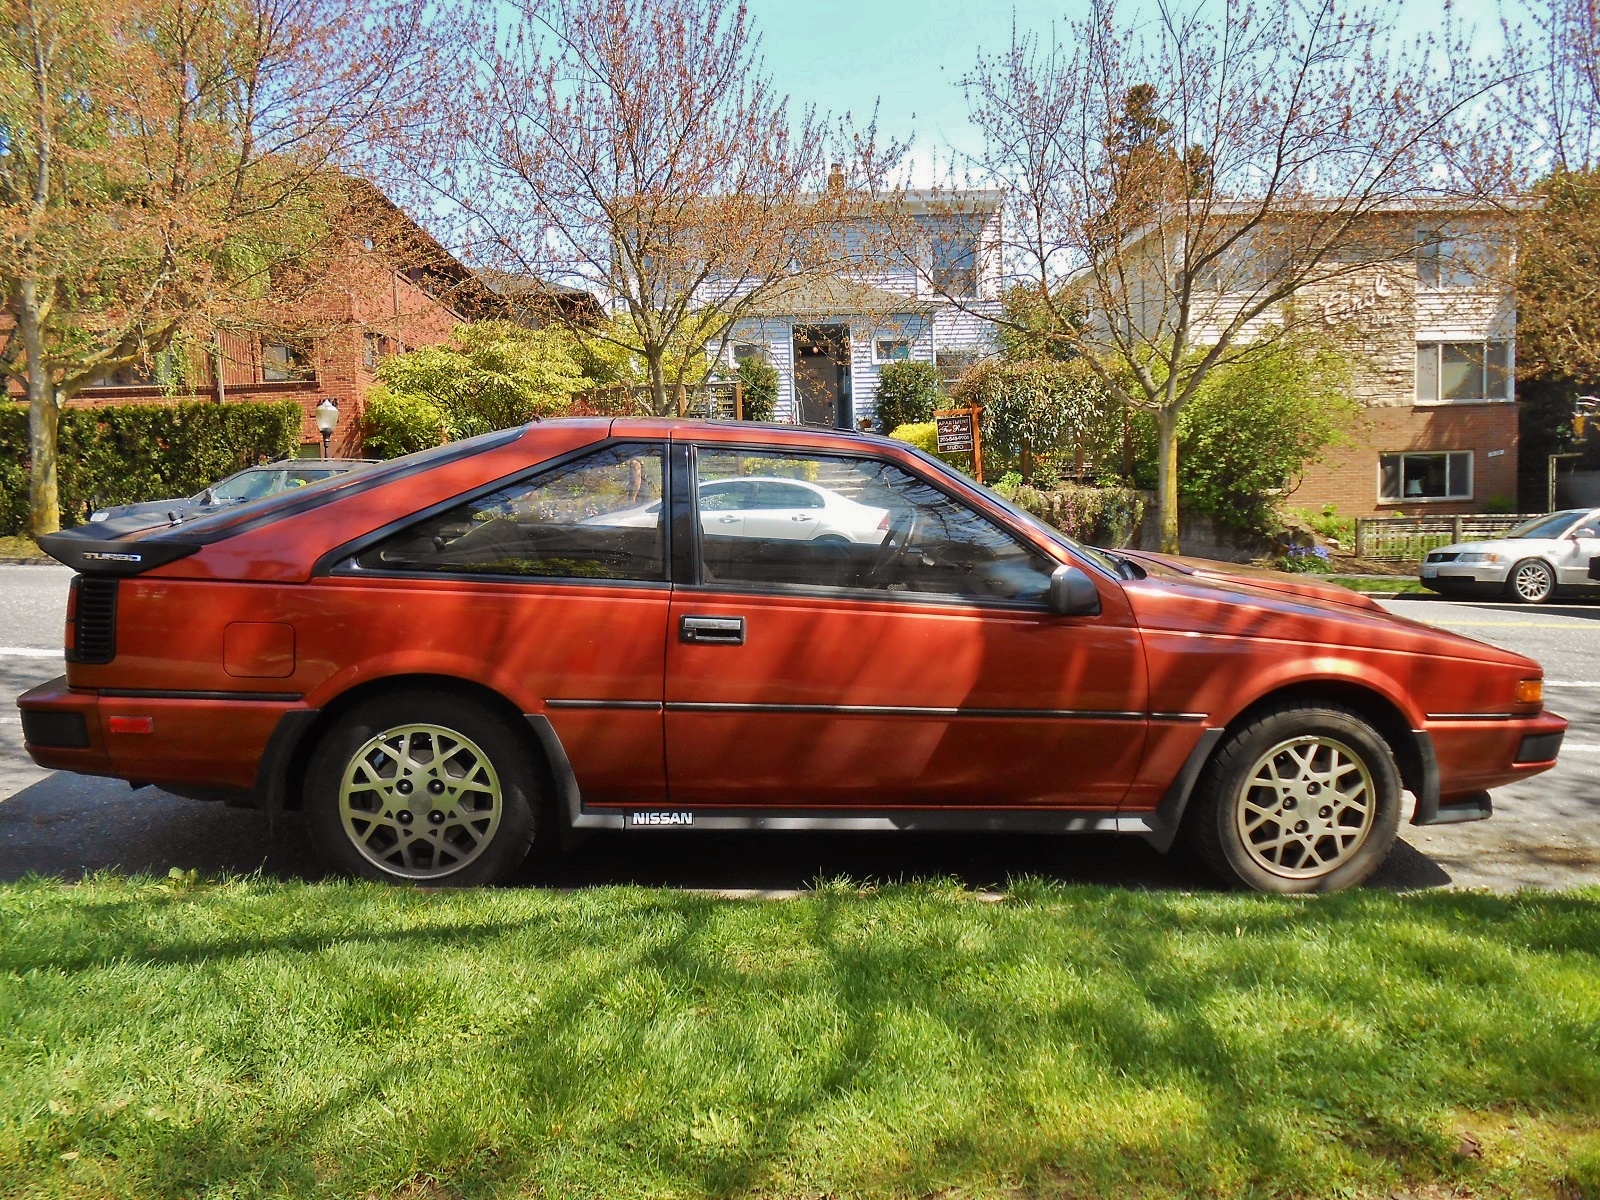 Seattle's Parked Cars: 1985 Datsun Nissan 200SX Turbo